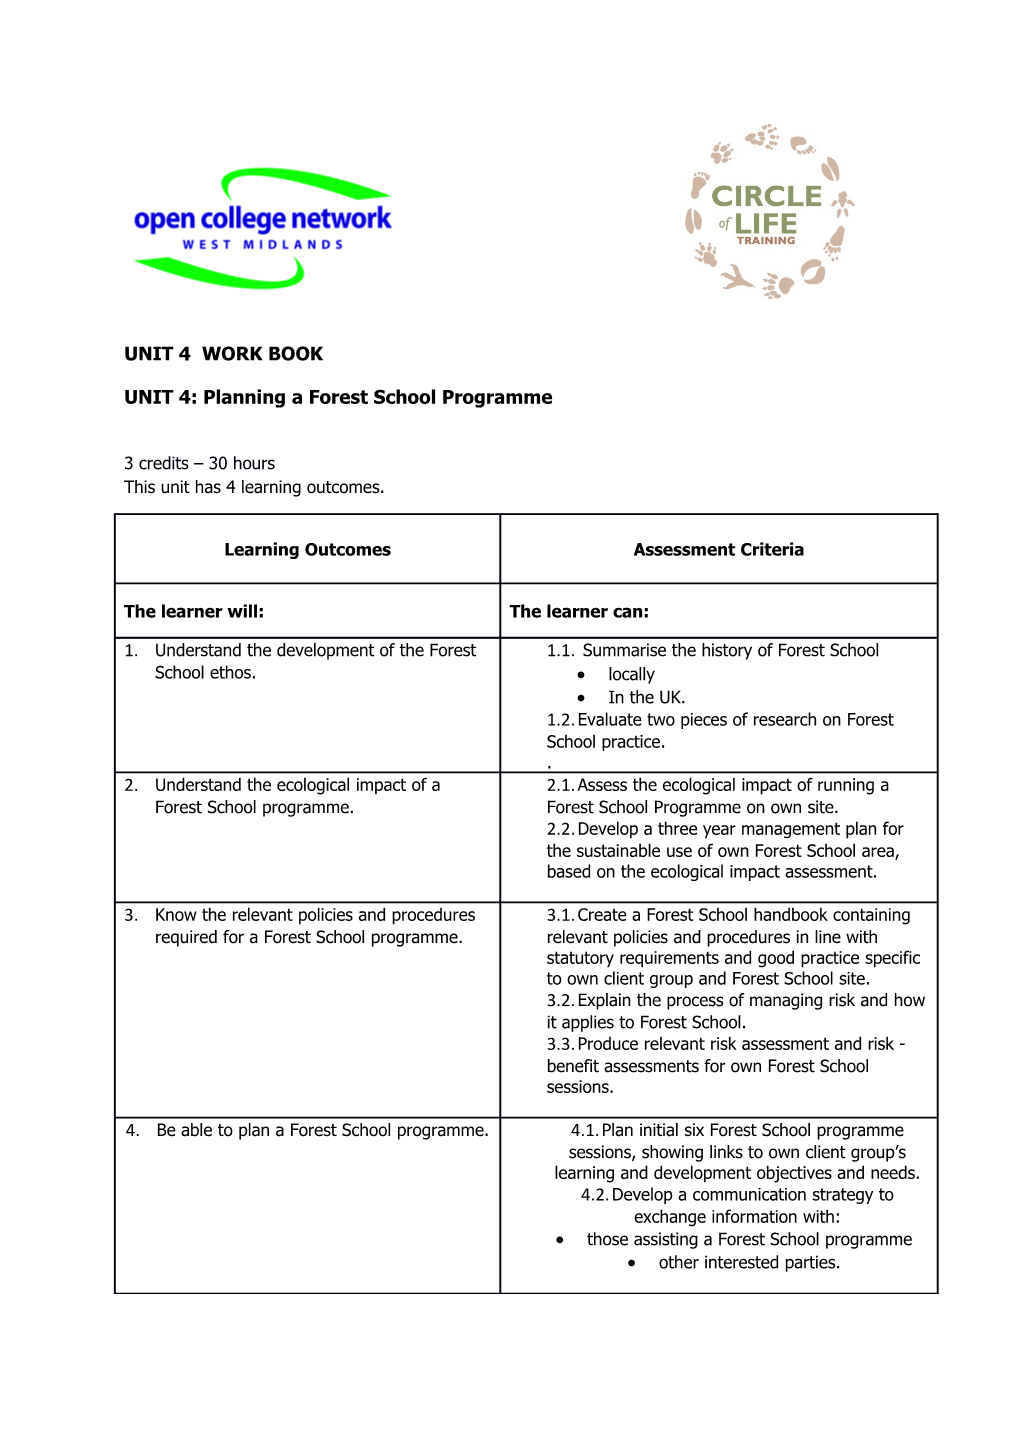 UNIT 4: Planning a Forest School Programme